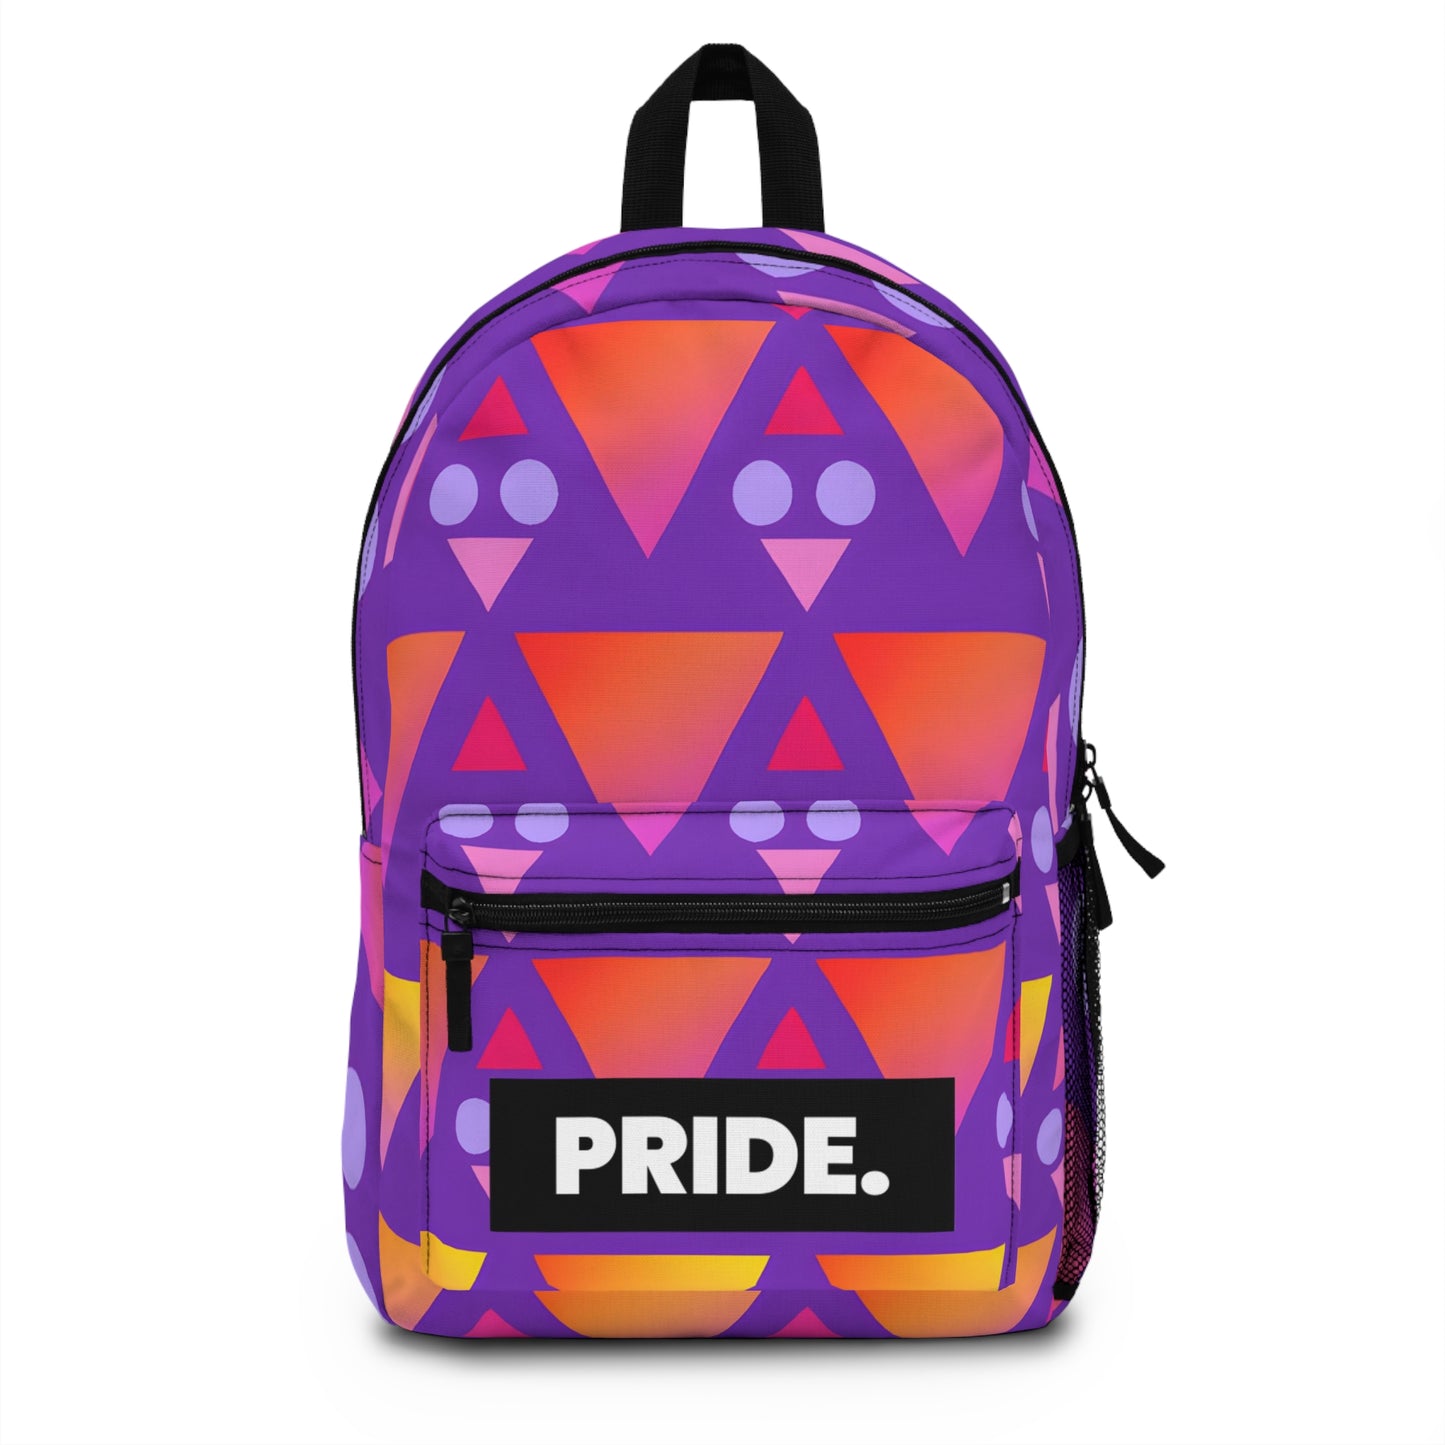 GlitzyGlamour - Gay Pride Backpack